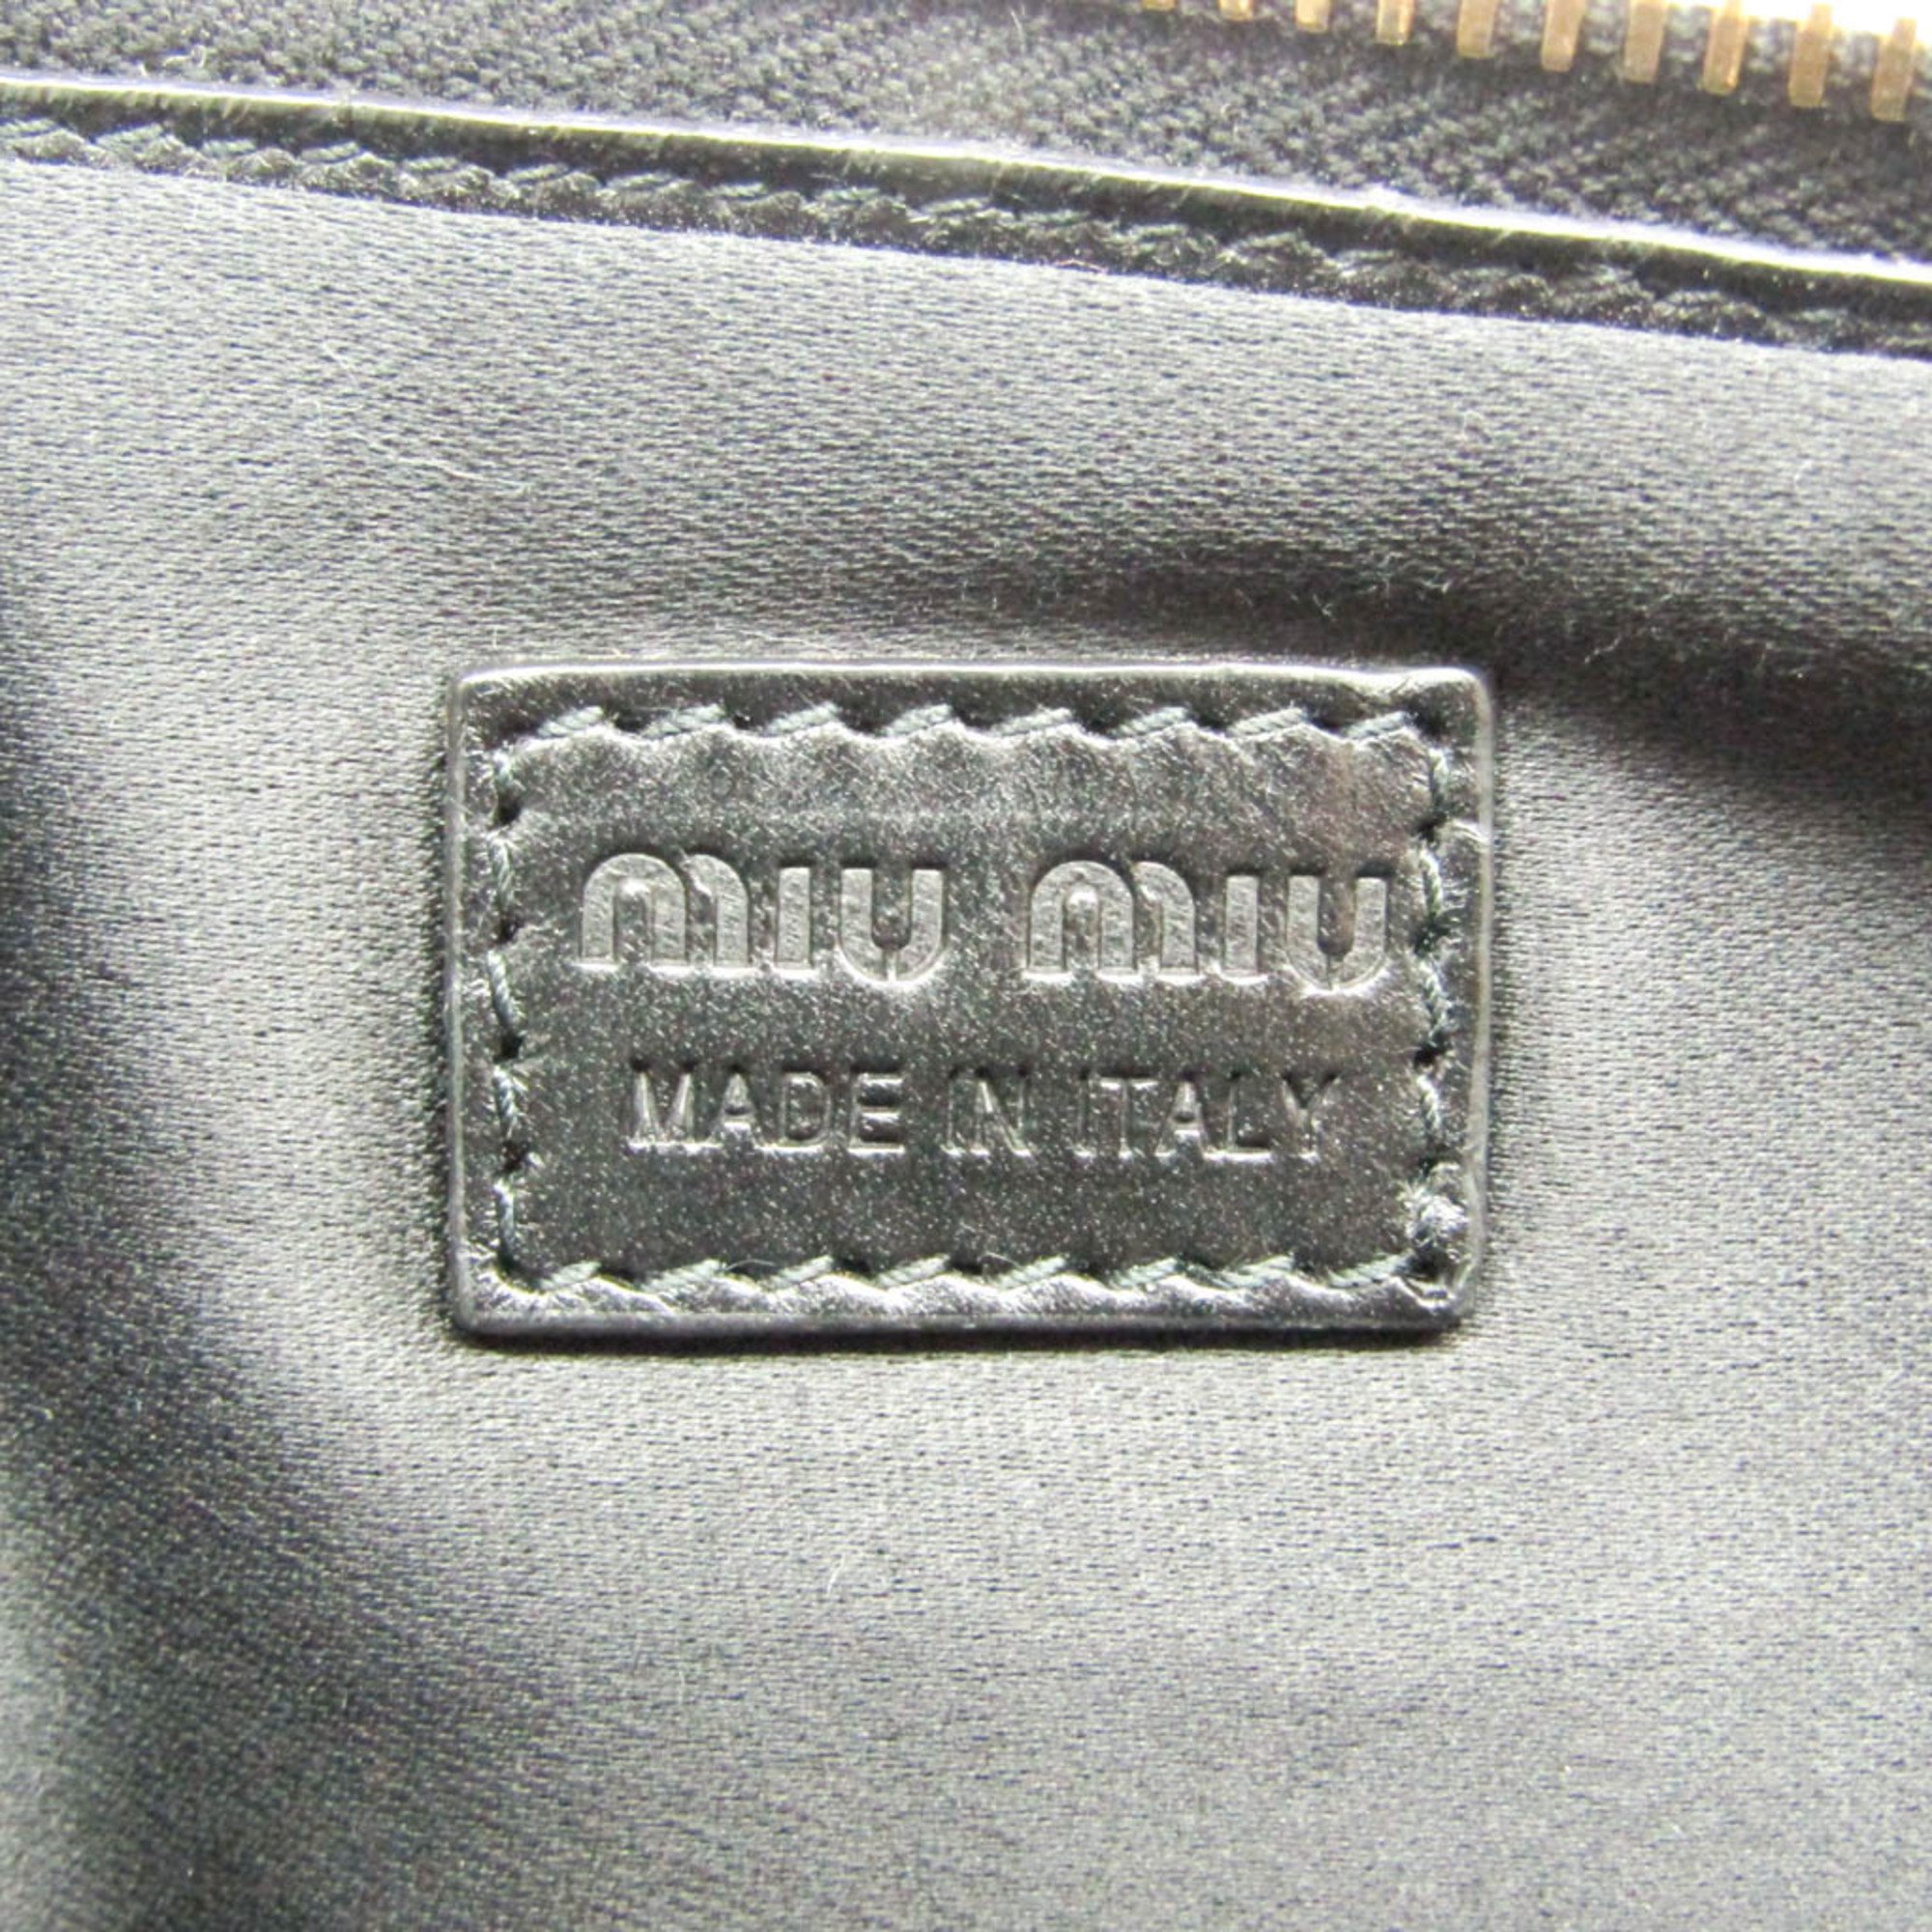 Miu Miu Star Pattern MADRAS PRINT 5ZH011 Women's Leather Shoulder Bag Black,Blue,White